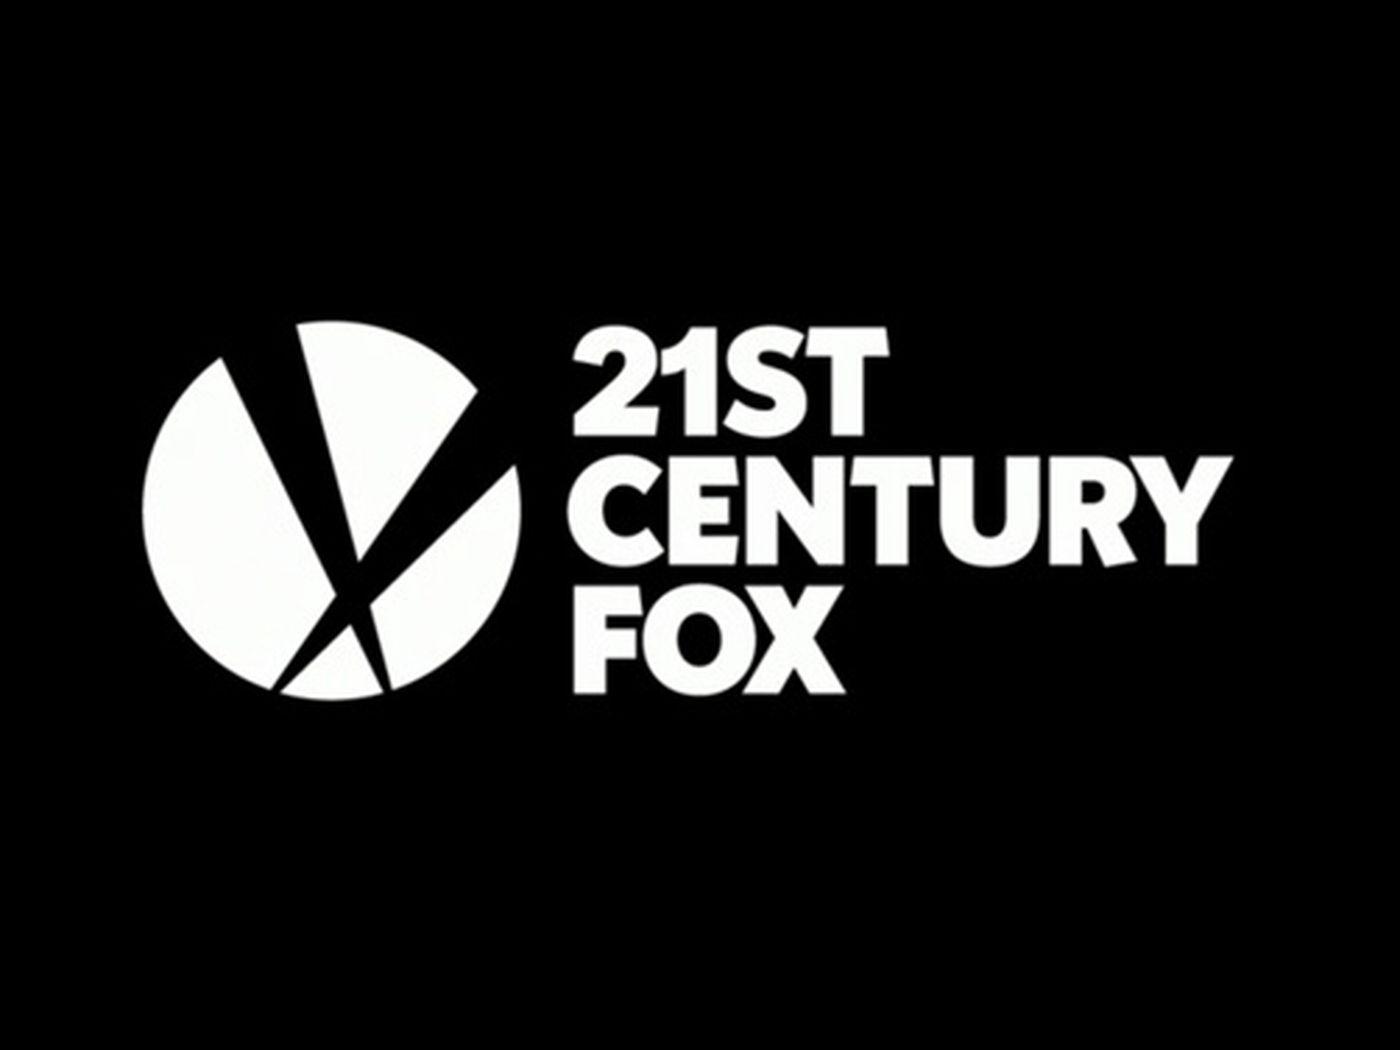 21st Century Fox logo unveiled ahead of News Corp split